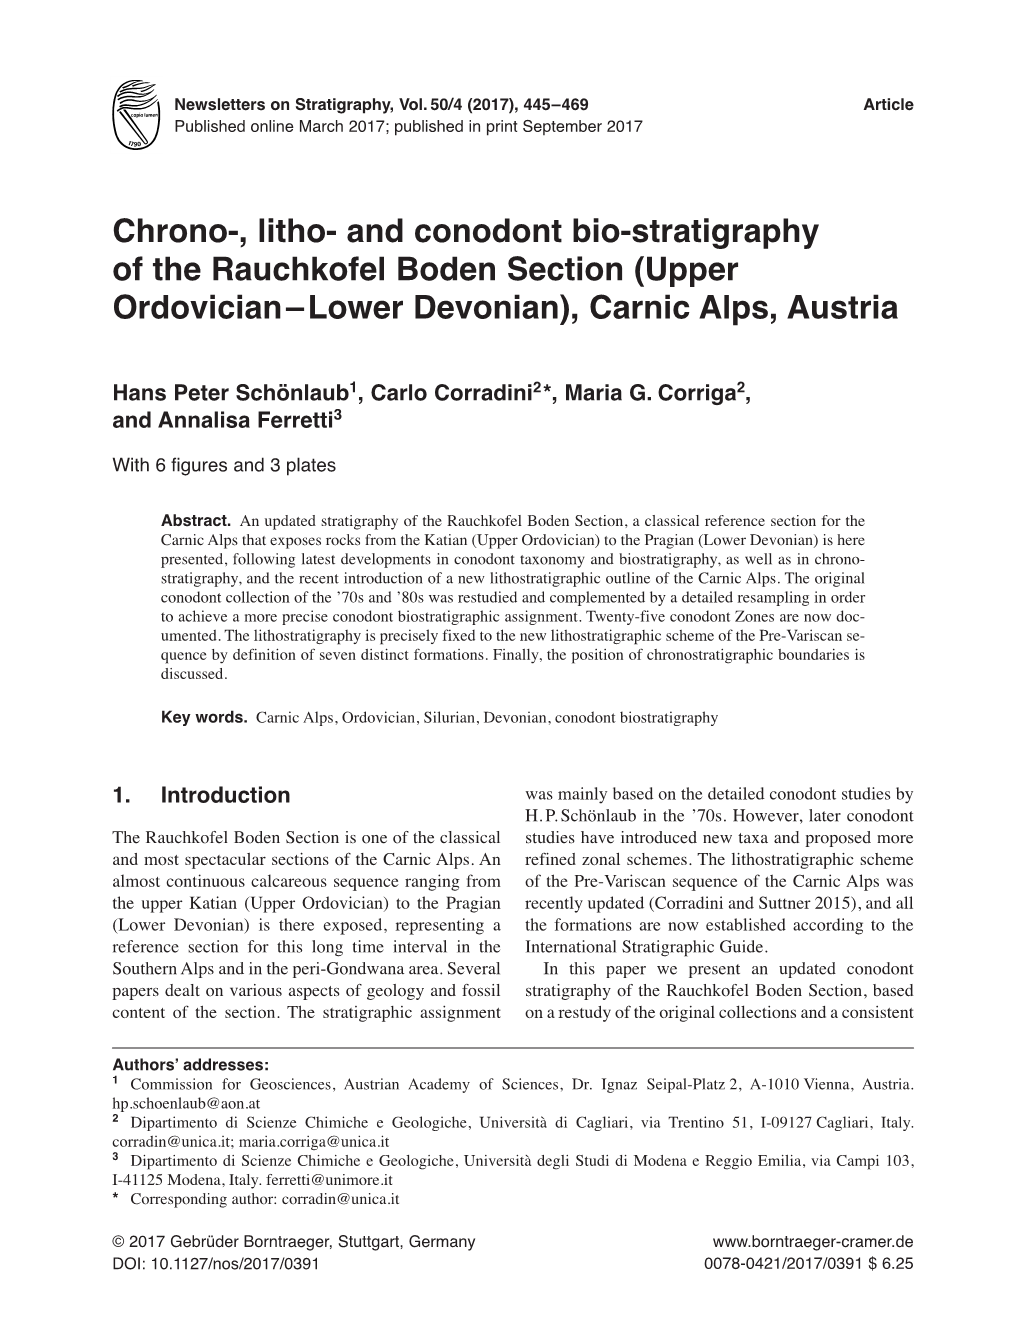 Chrono-, Litho- and Conodont Bio-Stratigraphy of the Rauchkofel Boden Section (Upper Ordovician–Lower Devonian), Carnic Alps, Austria